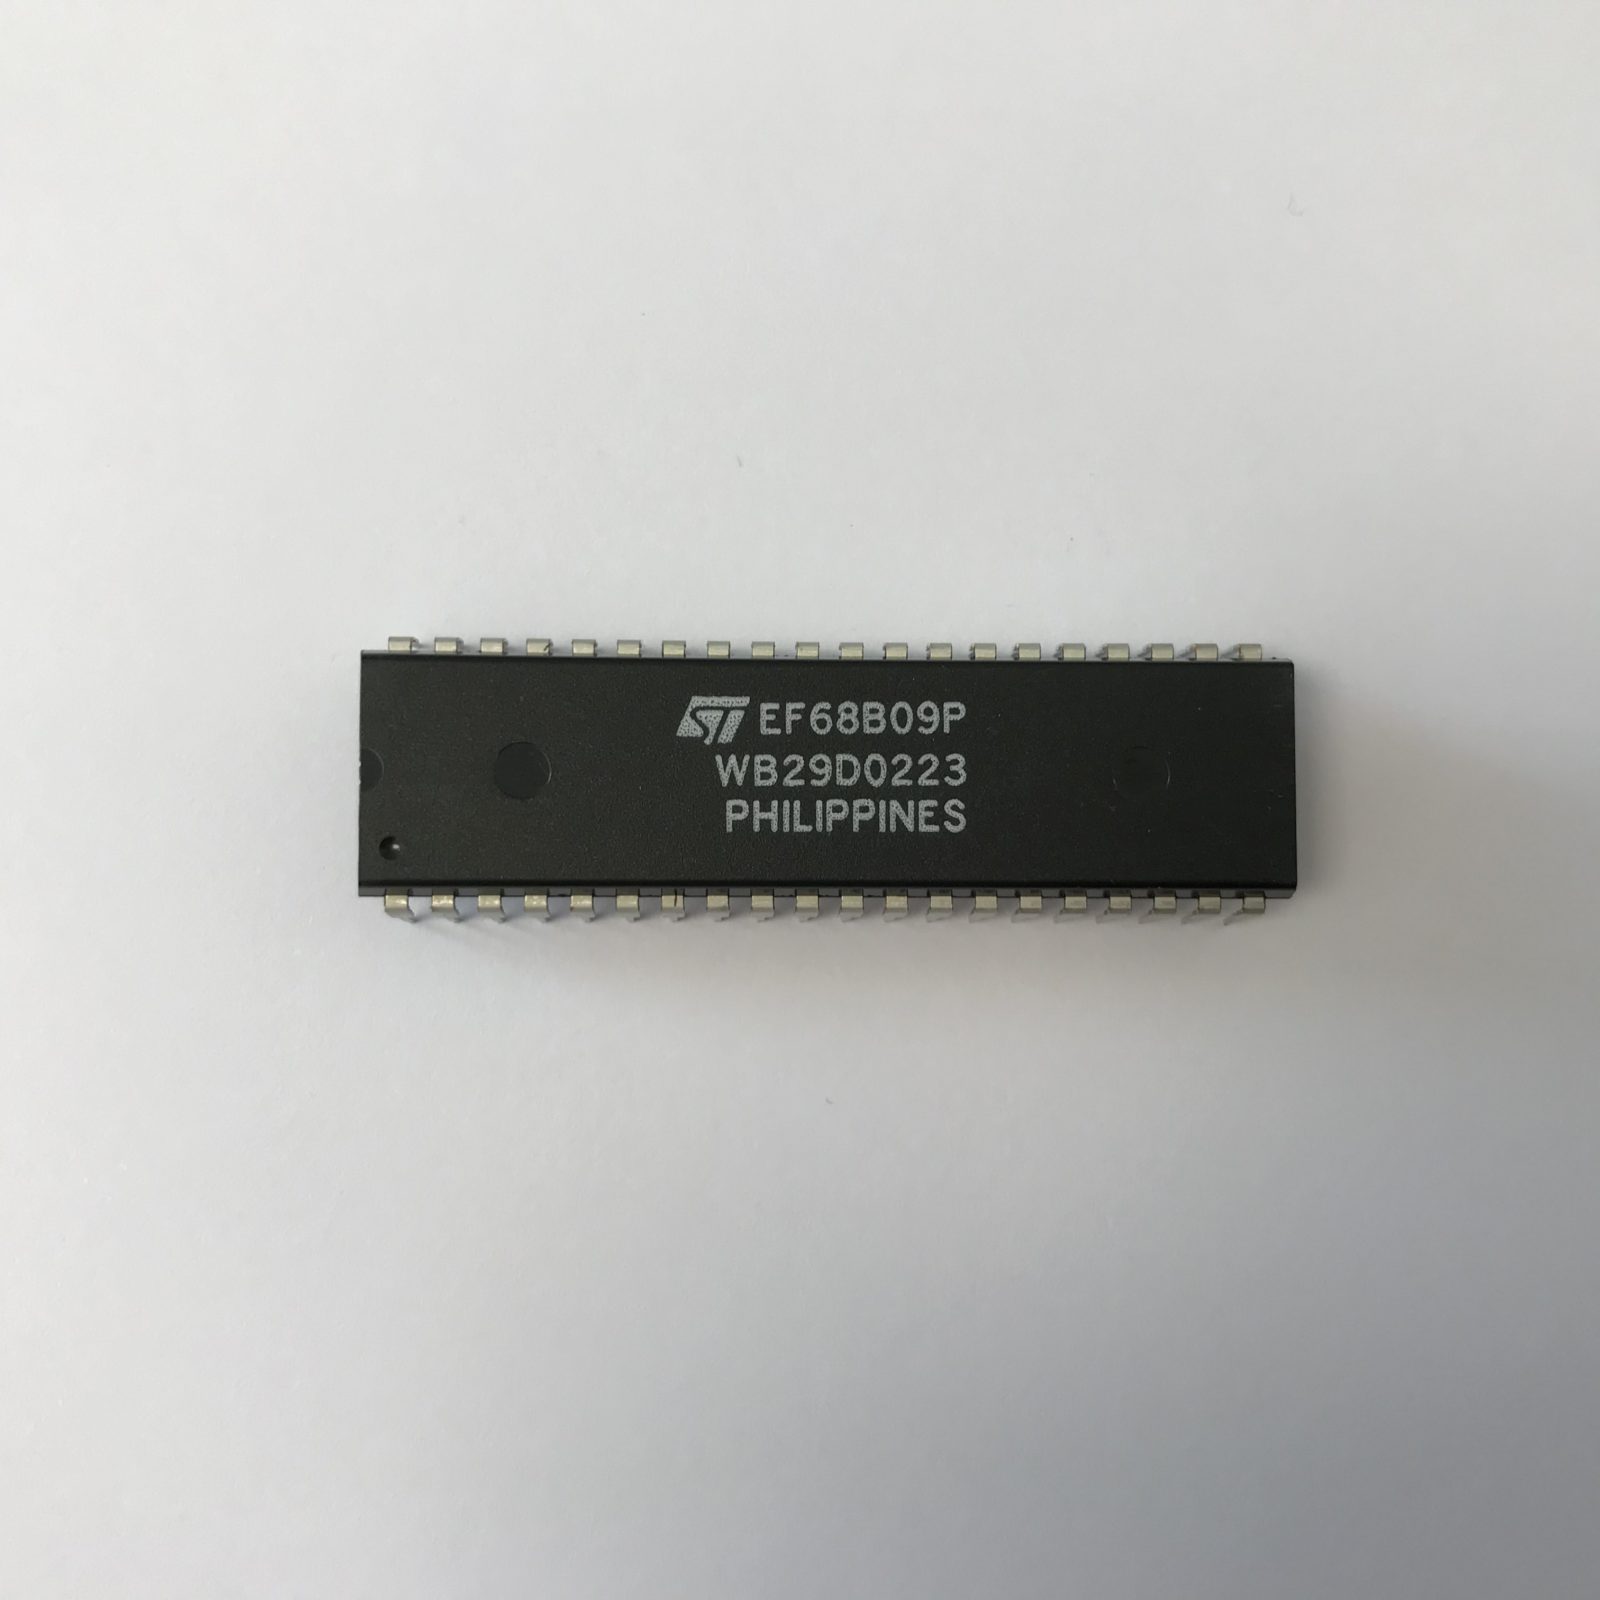 EF68B09P STM DIP 40 8-BIT INTEGRATED CIRCUIT x1PC